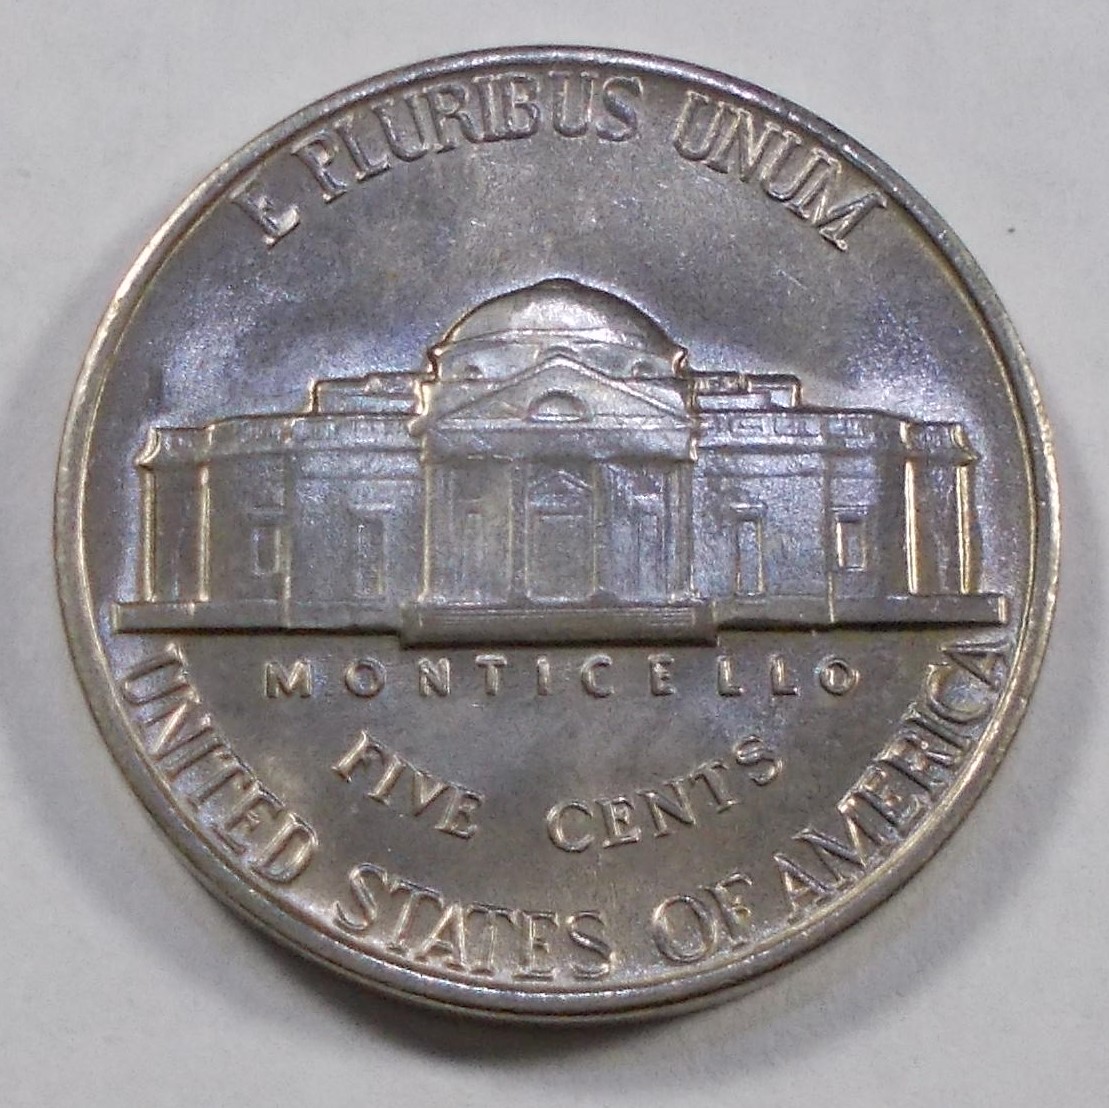 1940 Jefferson Nickel Grade? | Coin Talk